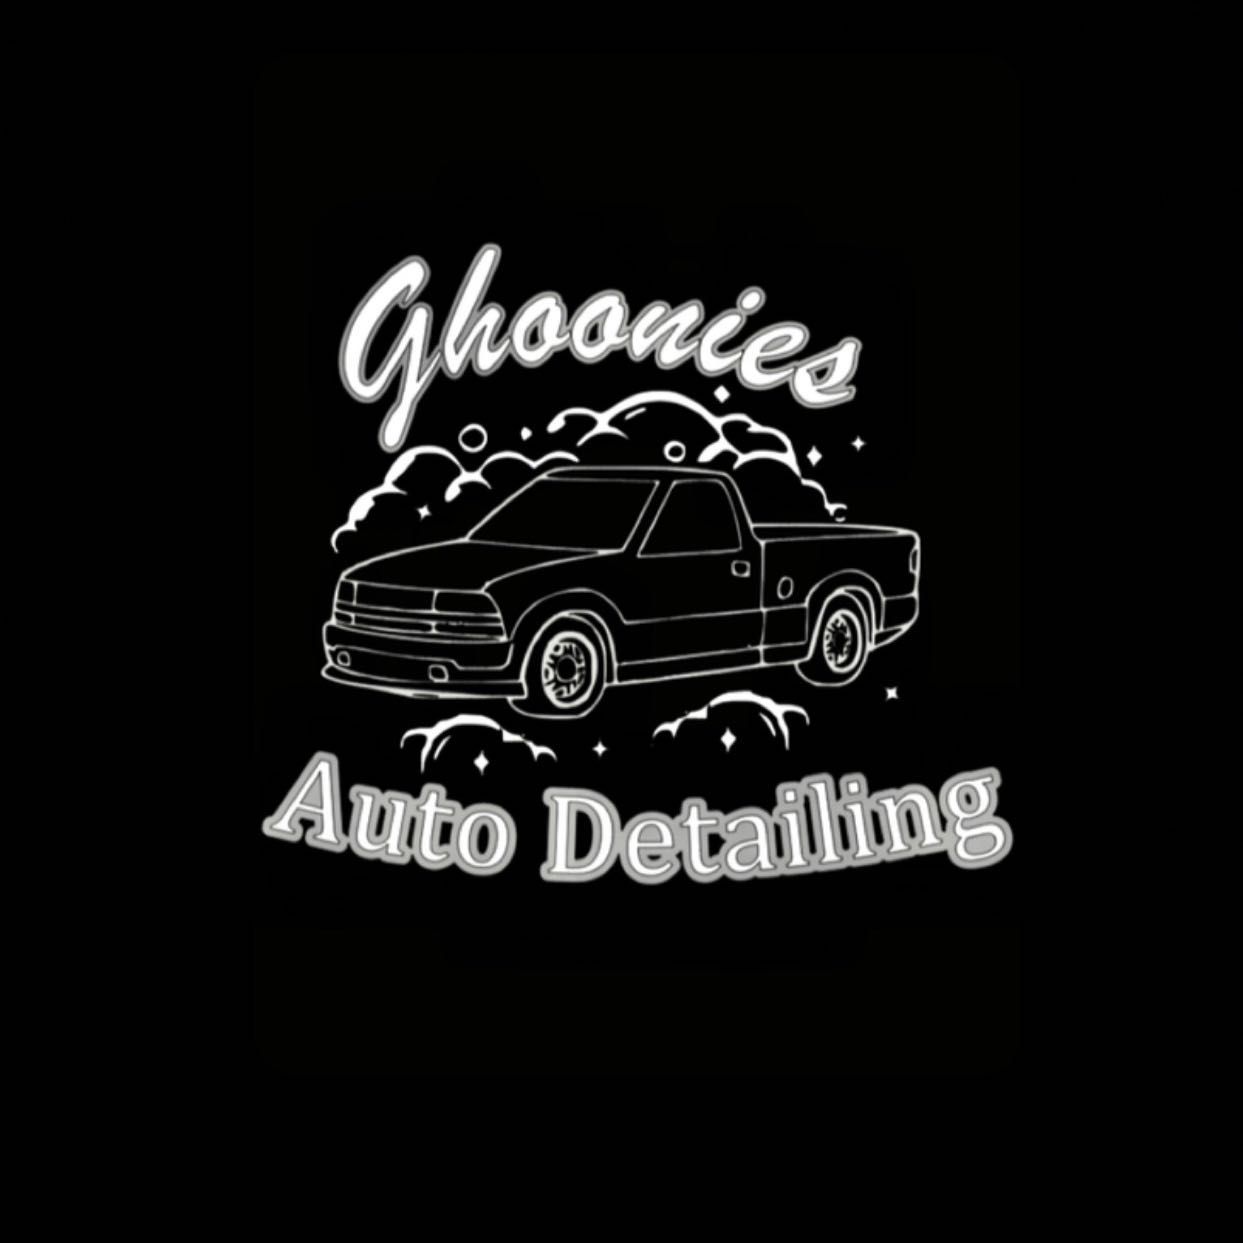 Ghoonies Auto Detailing LLC, 1141 S 4th St, Aurora, 60505